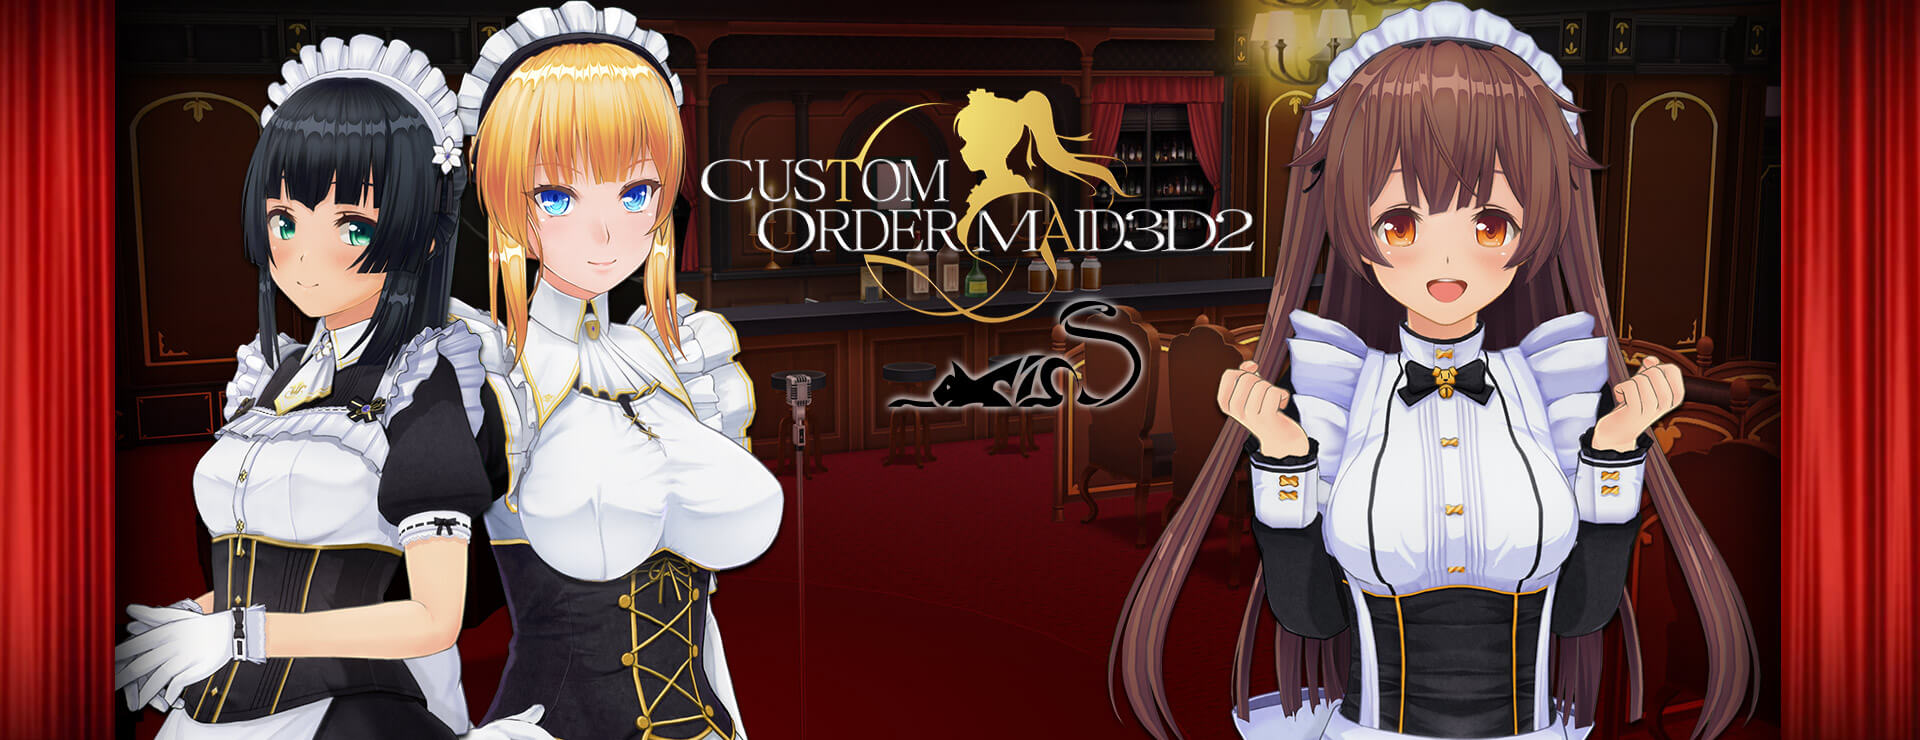 Custom Order Maid 3D2 Game - Simulation Game